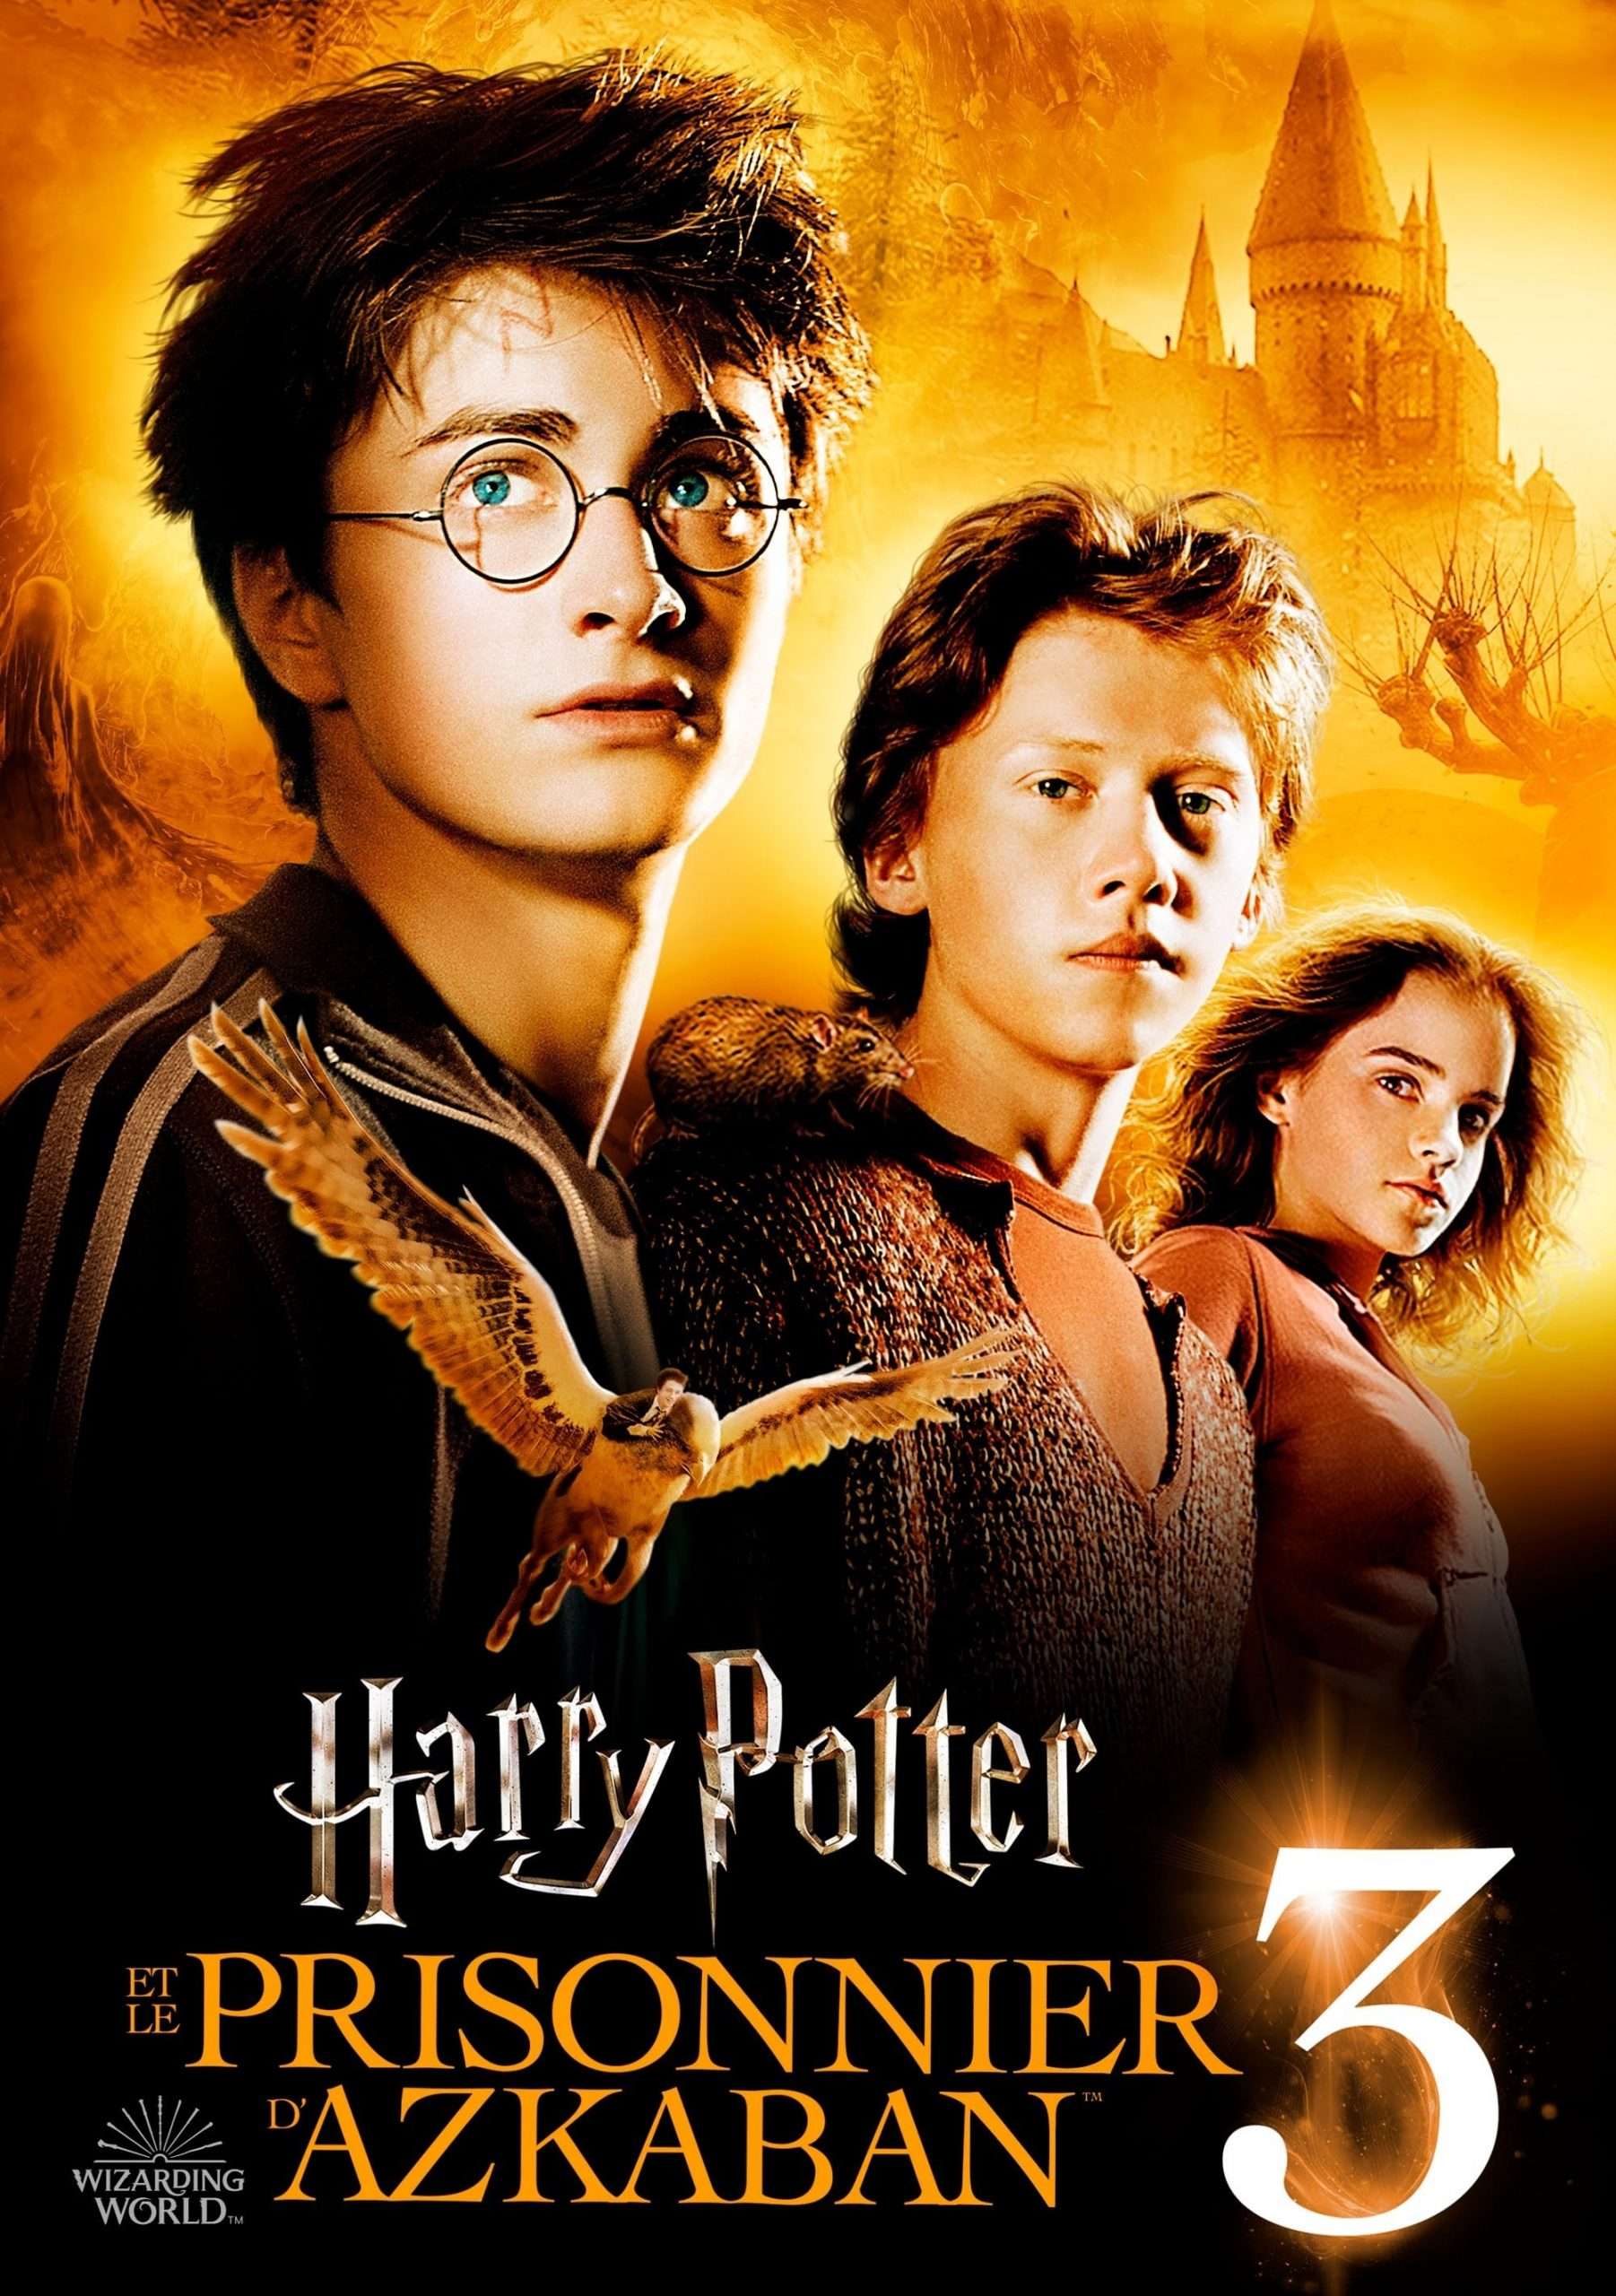 Watch Harry Potter and the Prisoner of Azkaban 2004 full movie online